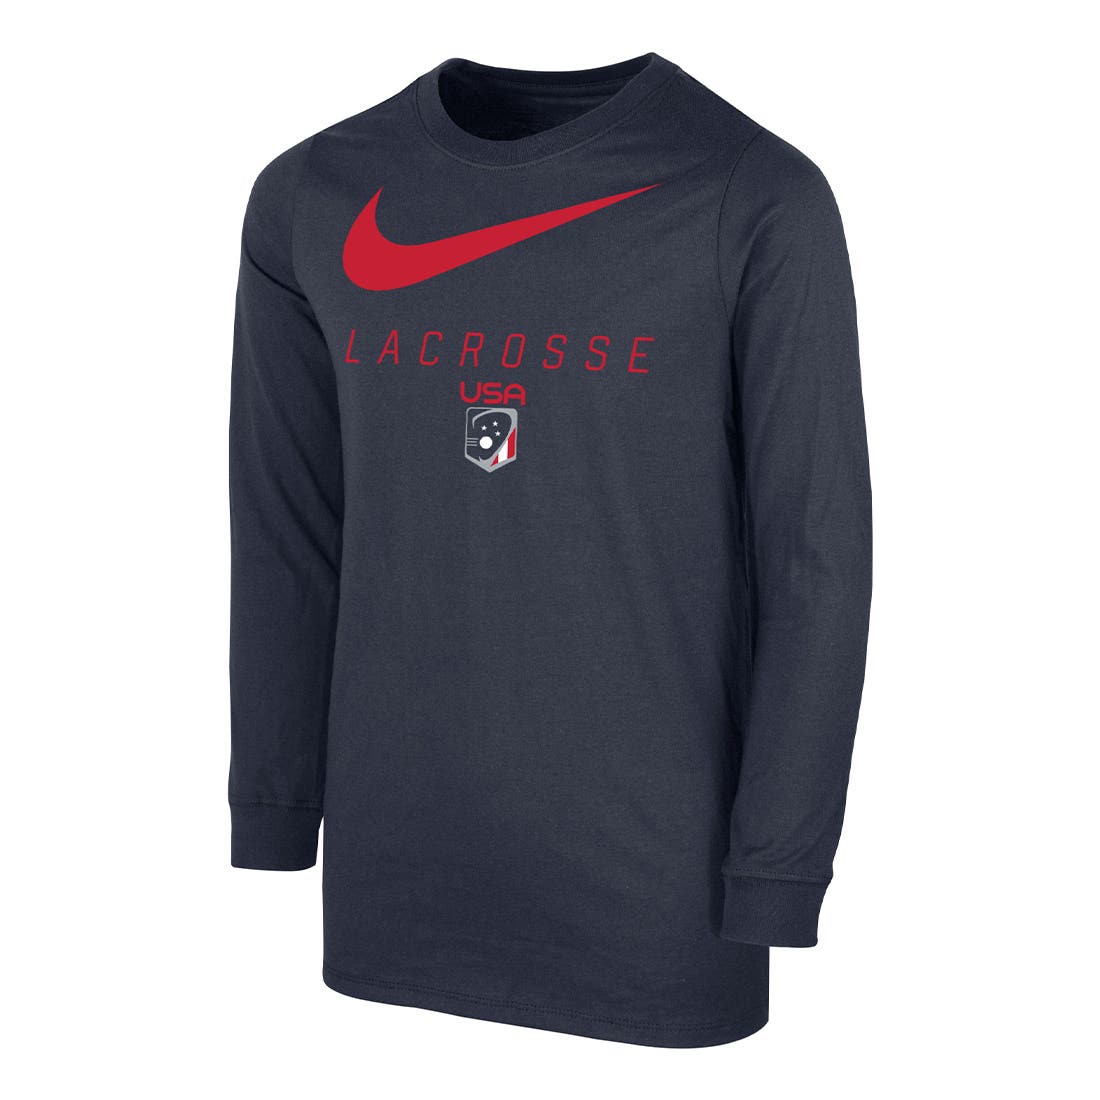 Nike USA Lacrosse Long Sleeve | Lacrosse Unlimited